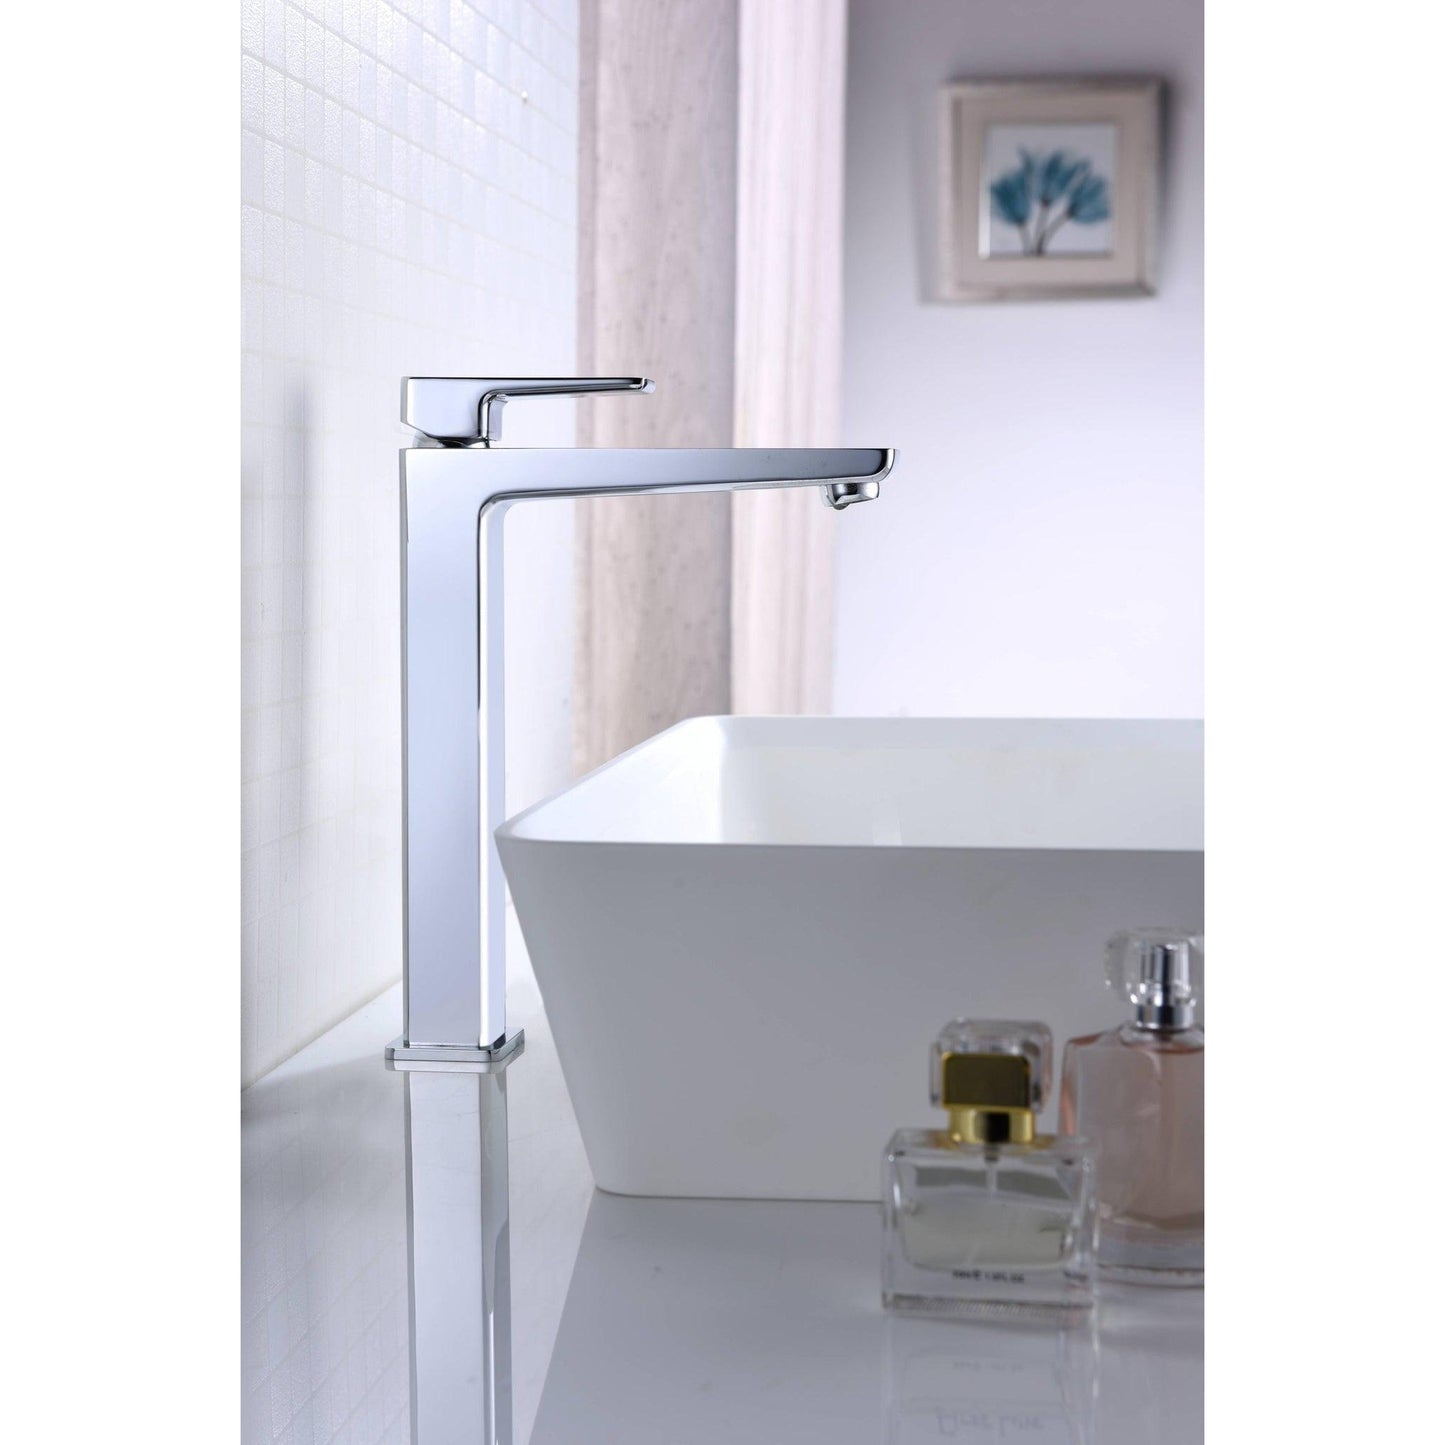 ANZZI Valor Series 9" Single Hole Polished Chrome Bathroom Sink Faucet